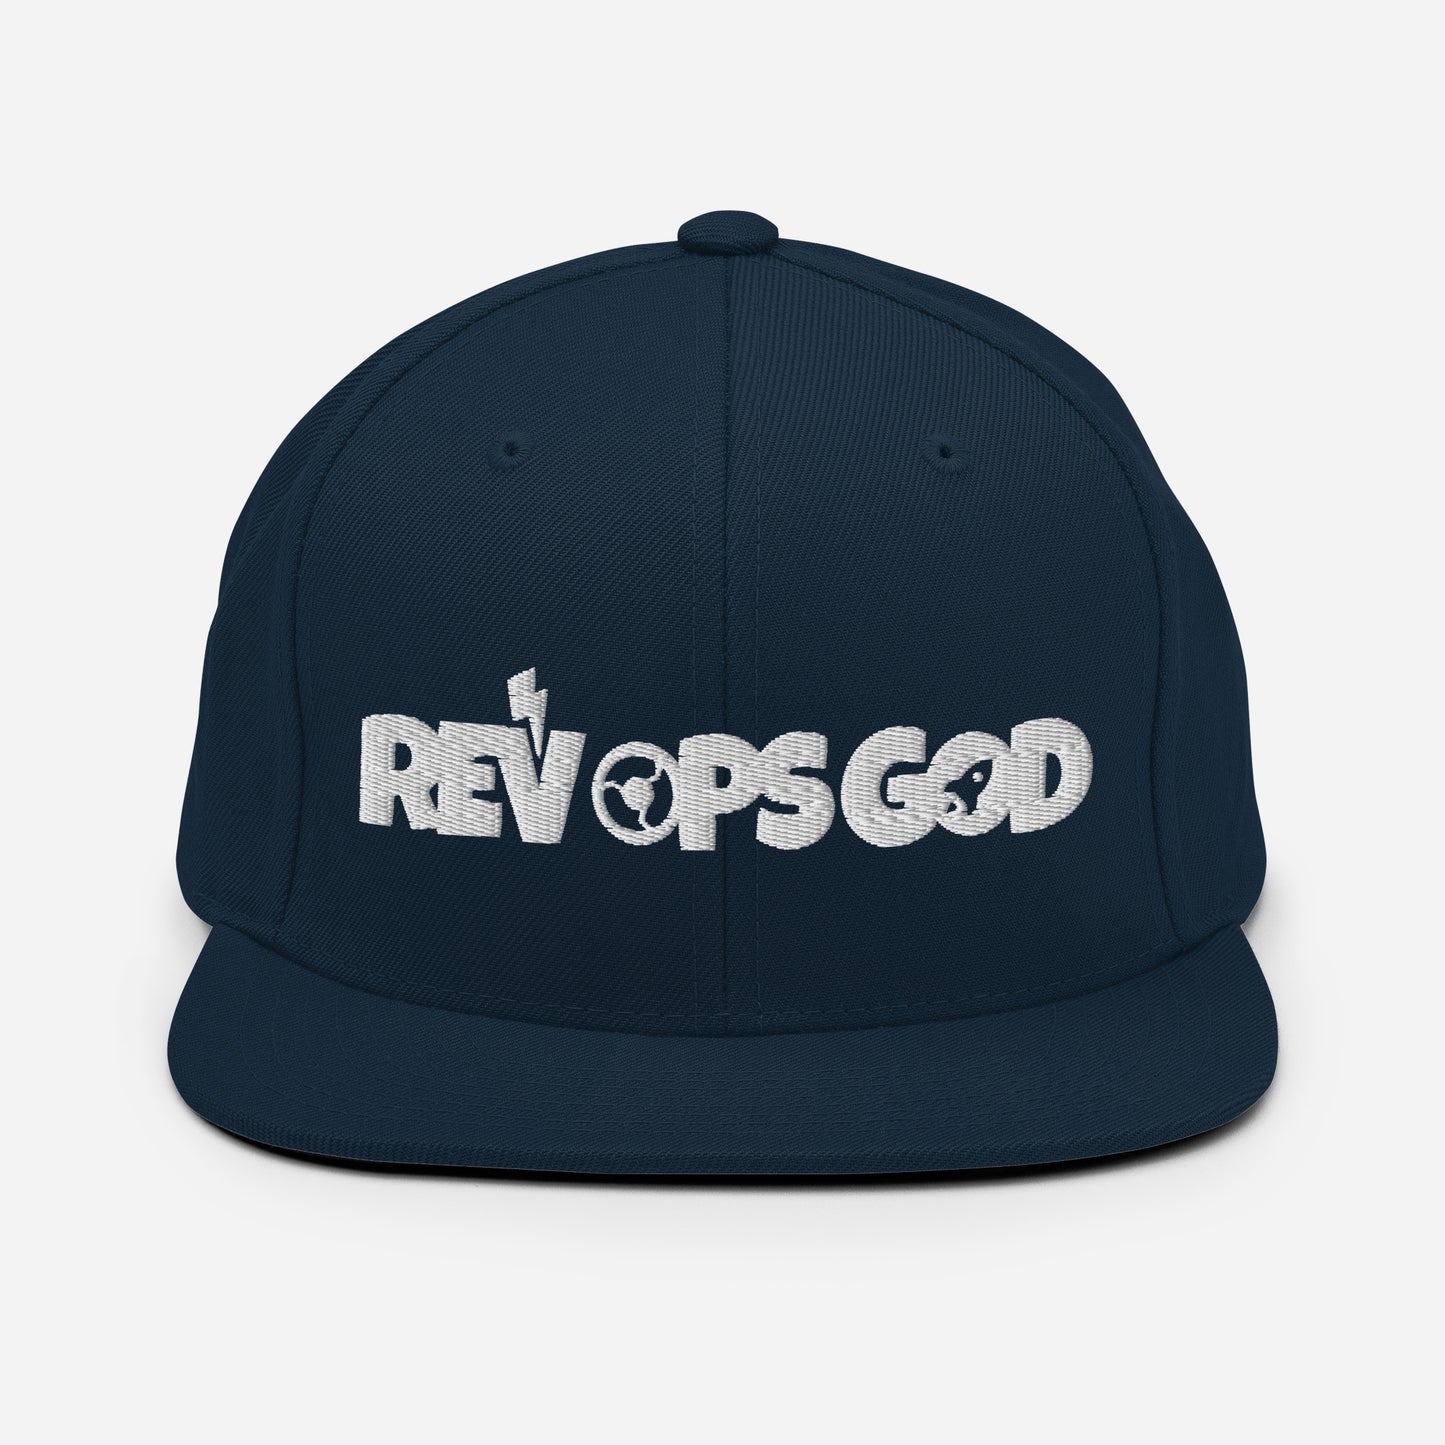 Rev Ops God Classic Snapback Hat